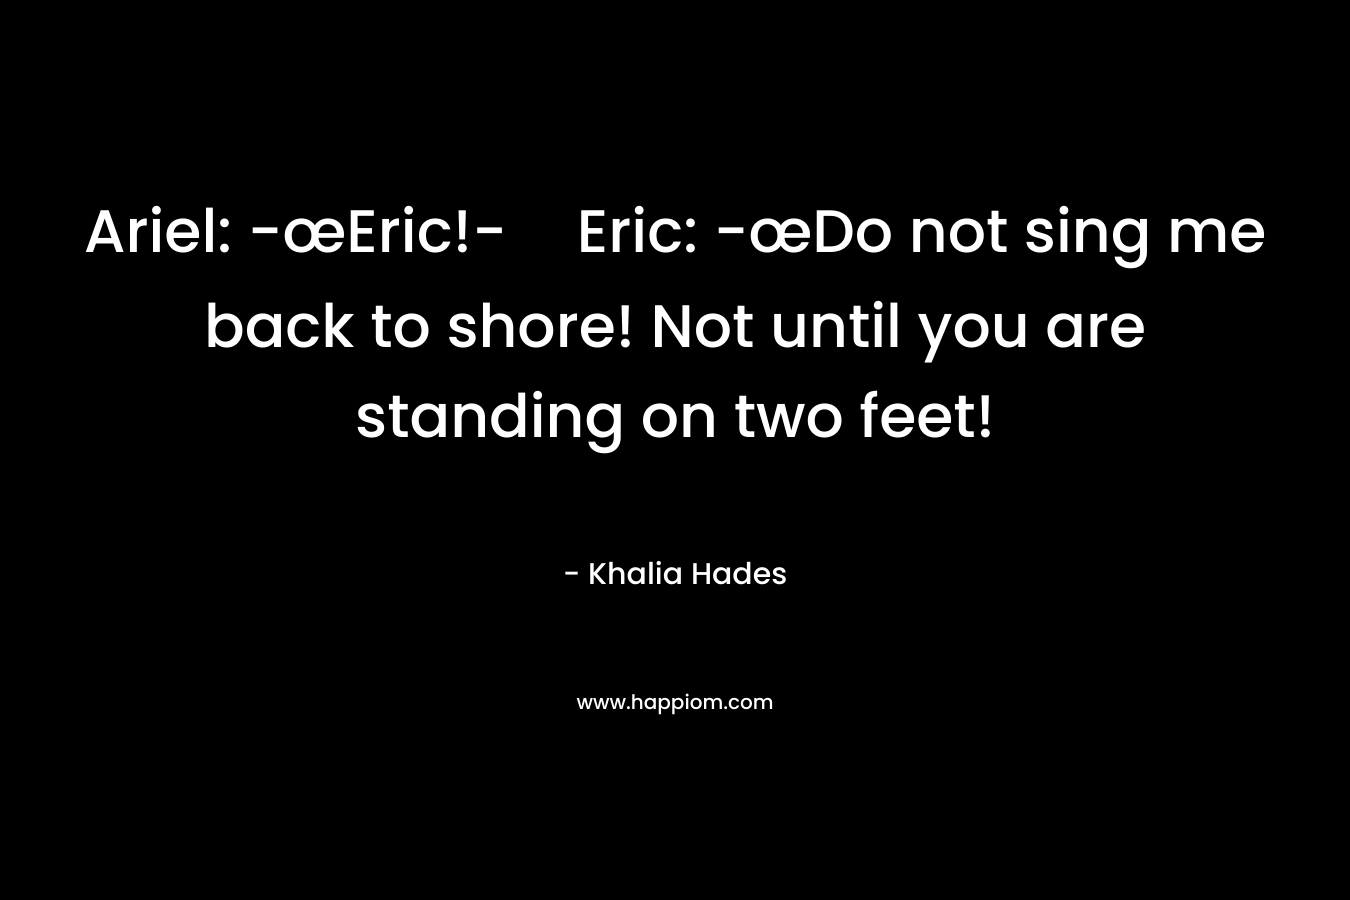 Ariel: -œEric!-Eric: -œDo not sing me back to shore! Not until you are standing on two feet!